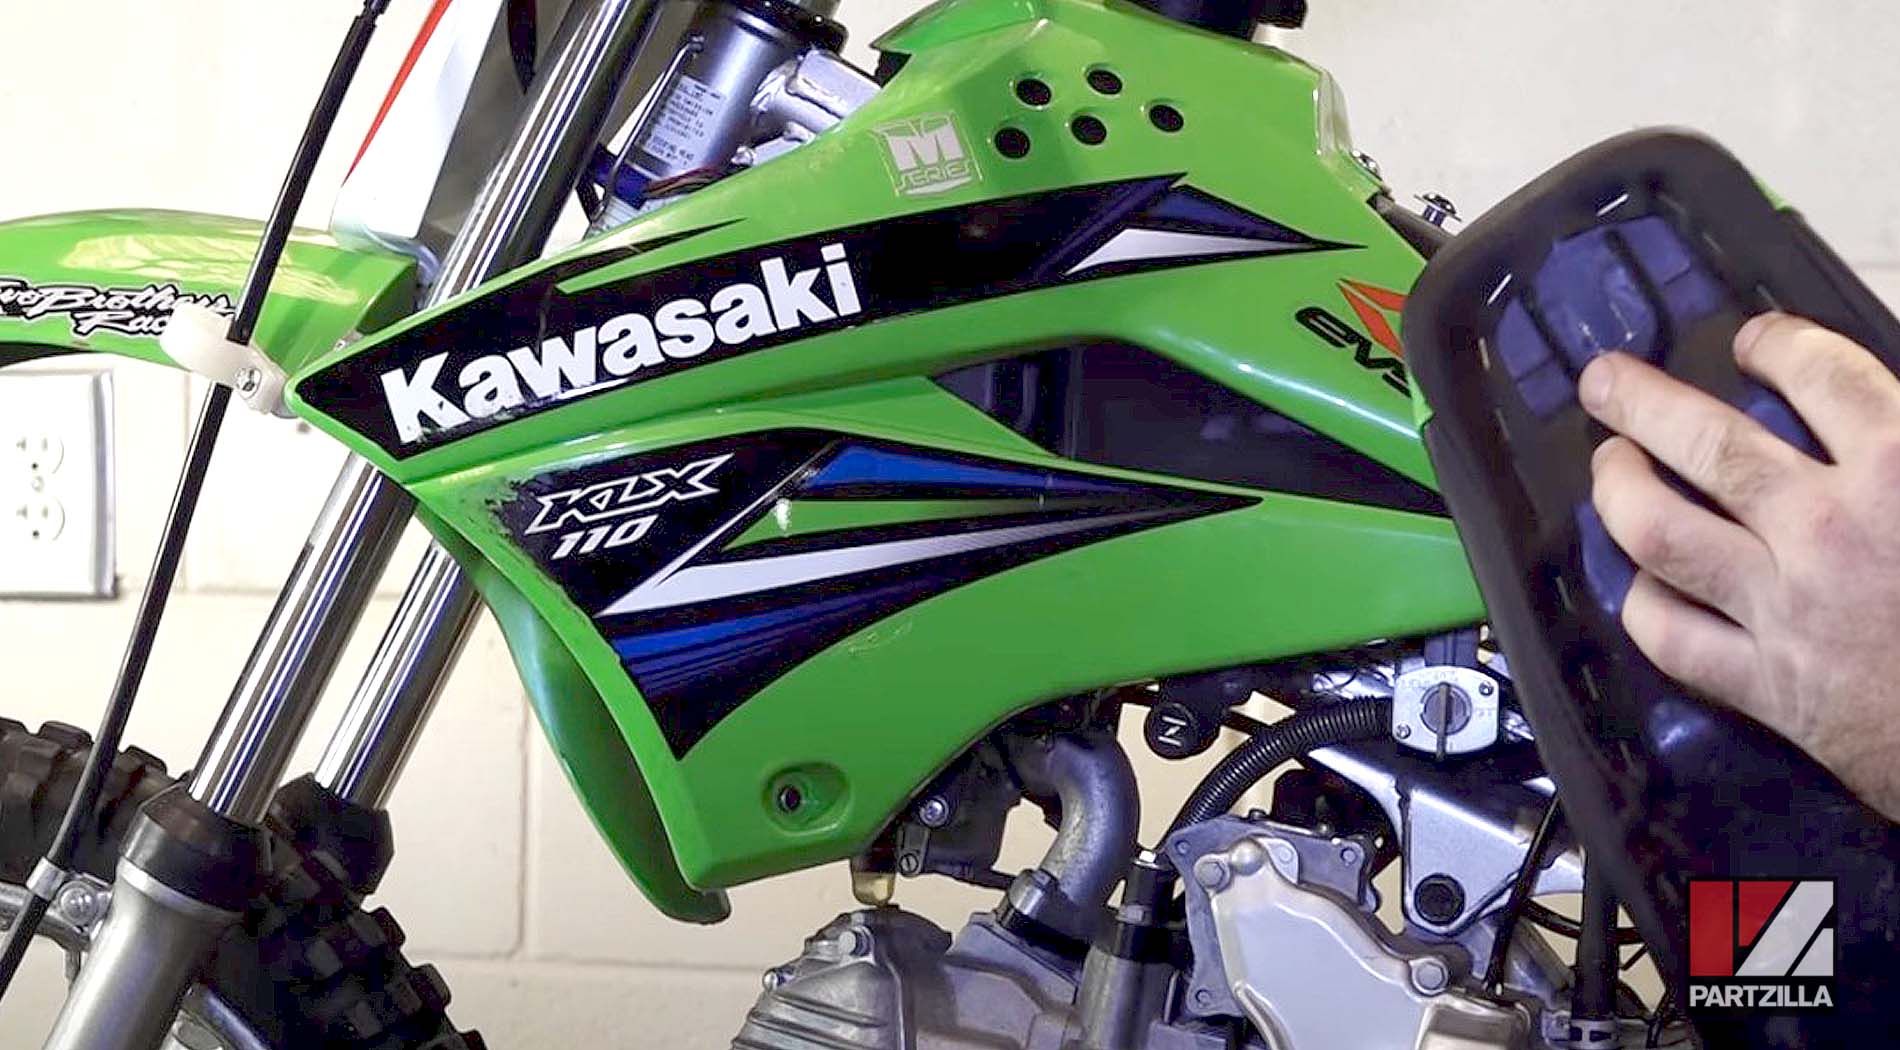 2015 Kawasaki KLX 110 dirt bike air filter replacement